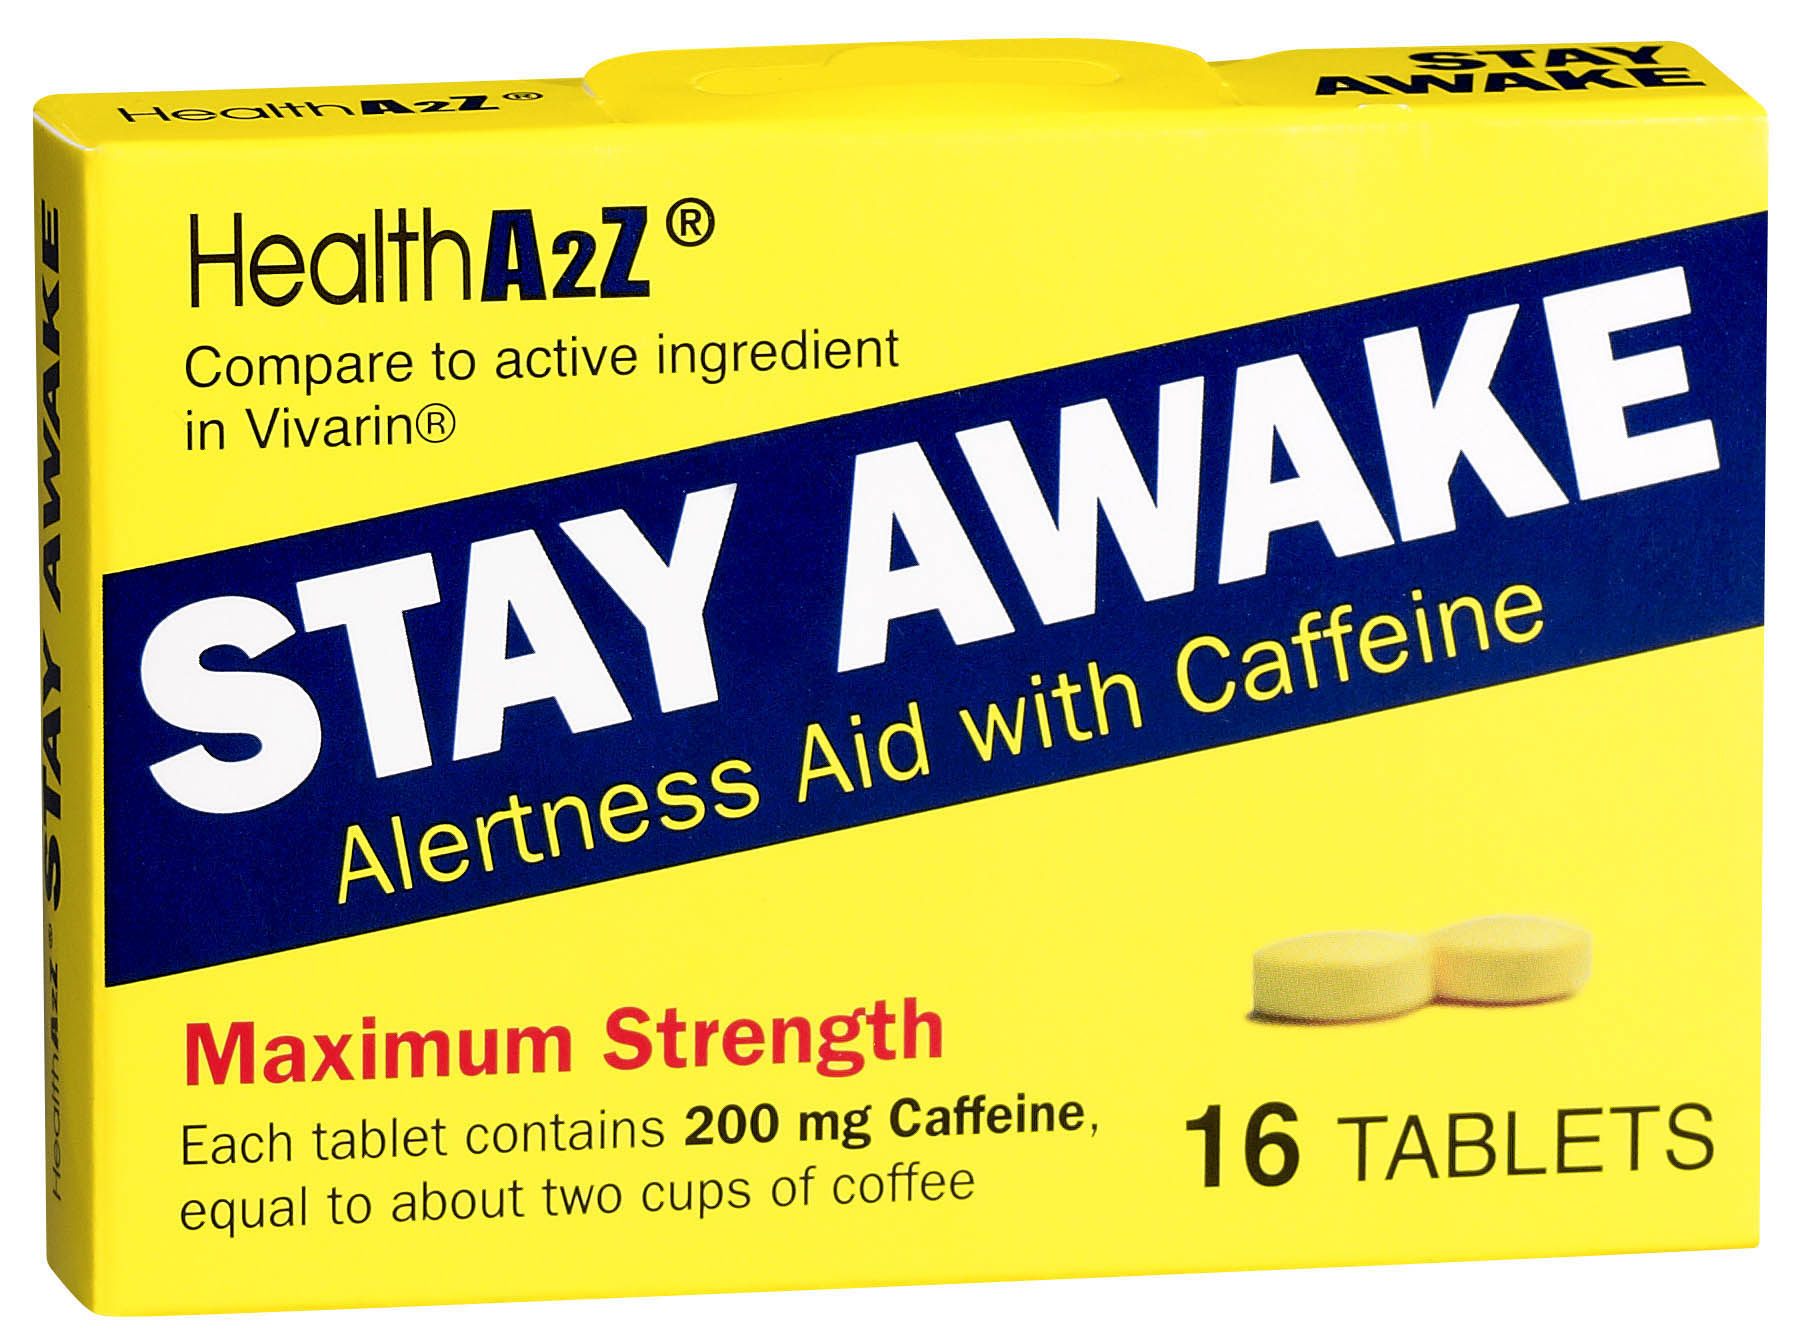 Health A2Z Alertness Aid